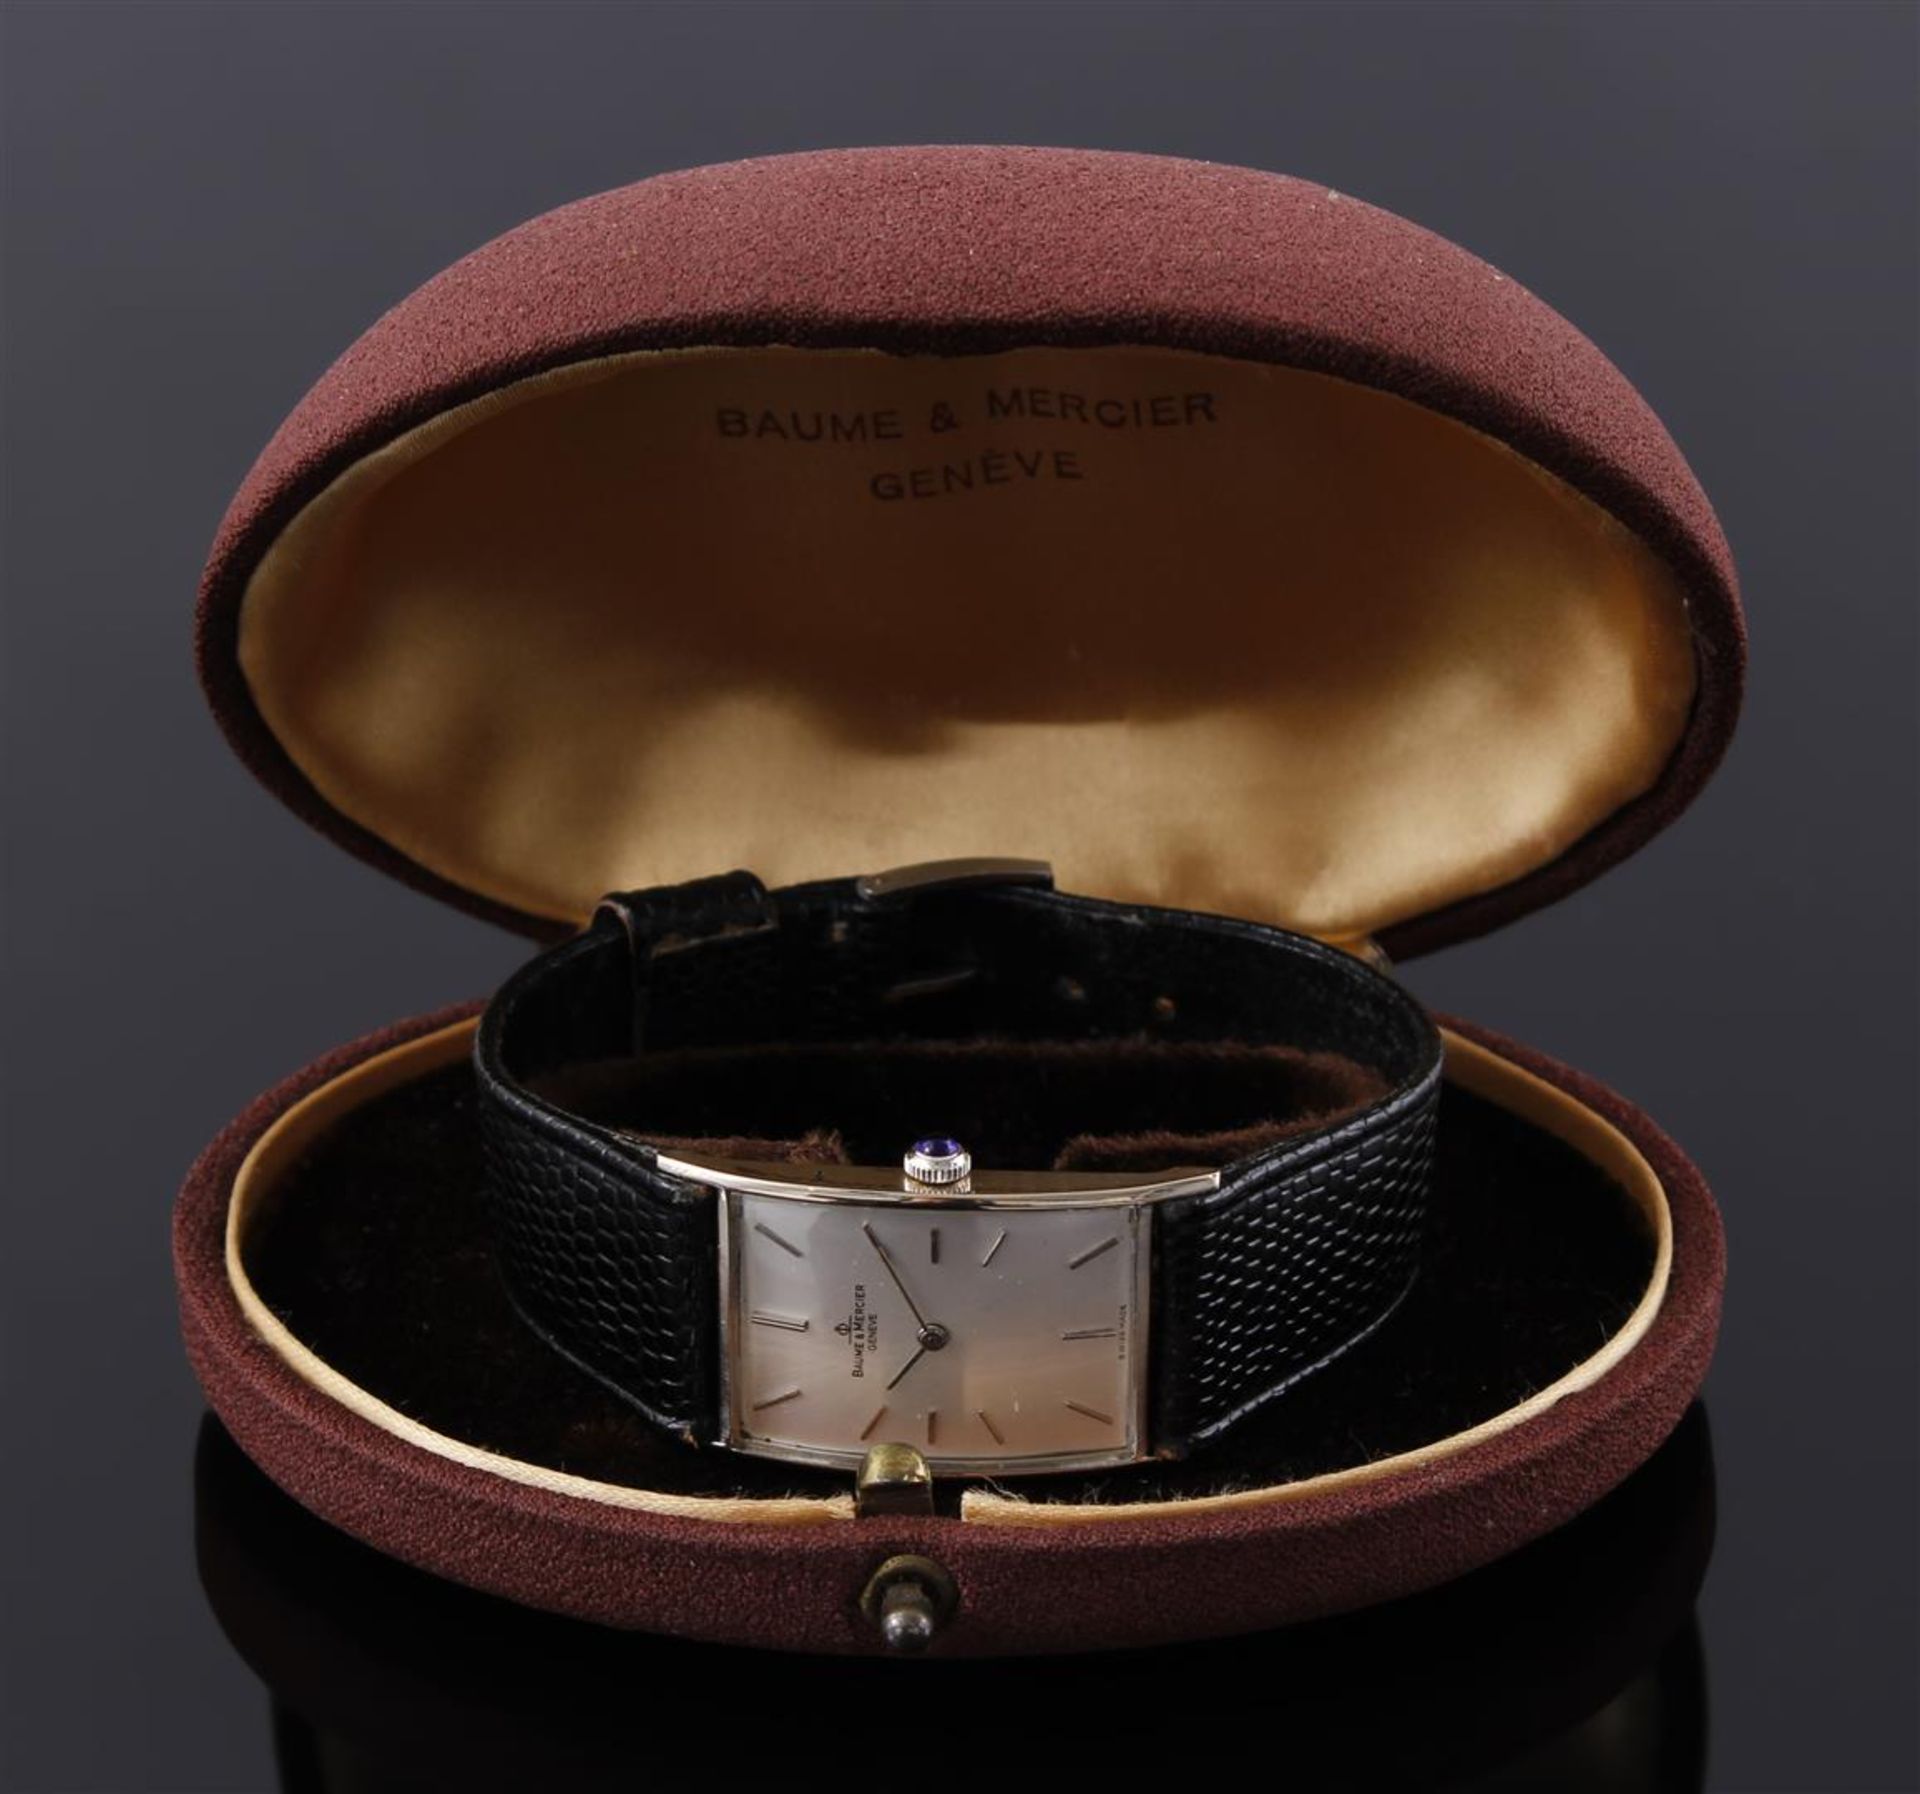 Baume & Mercier Genève wristwatch - Image 3 of 3